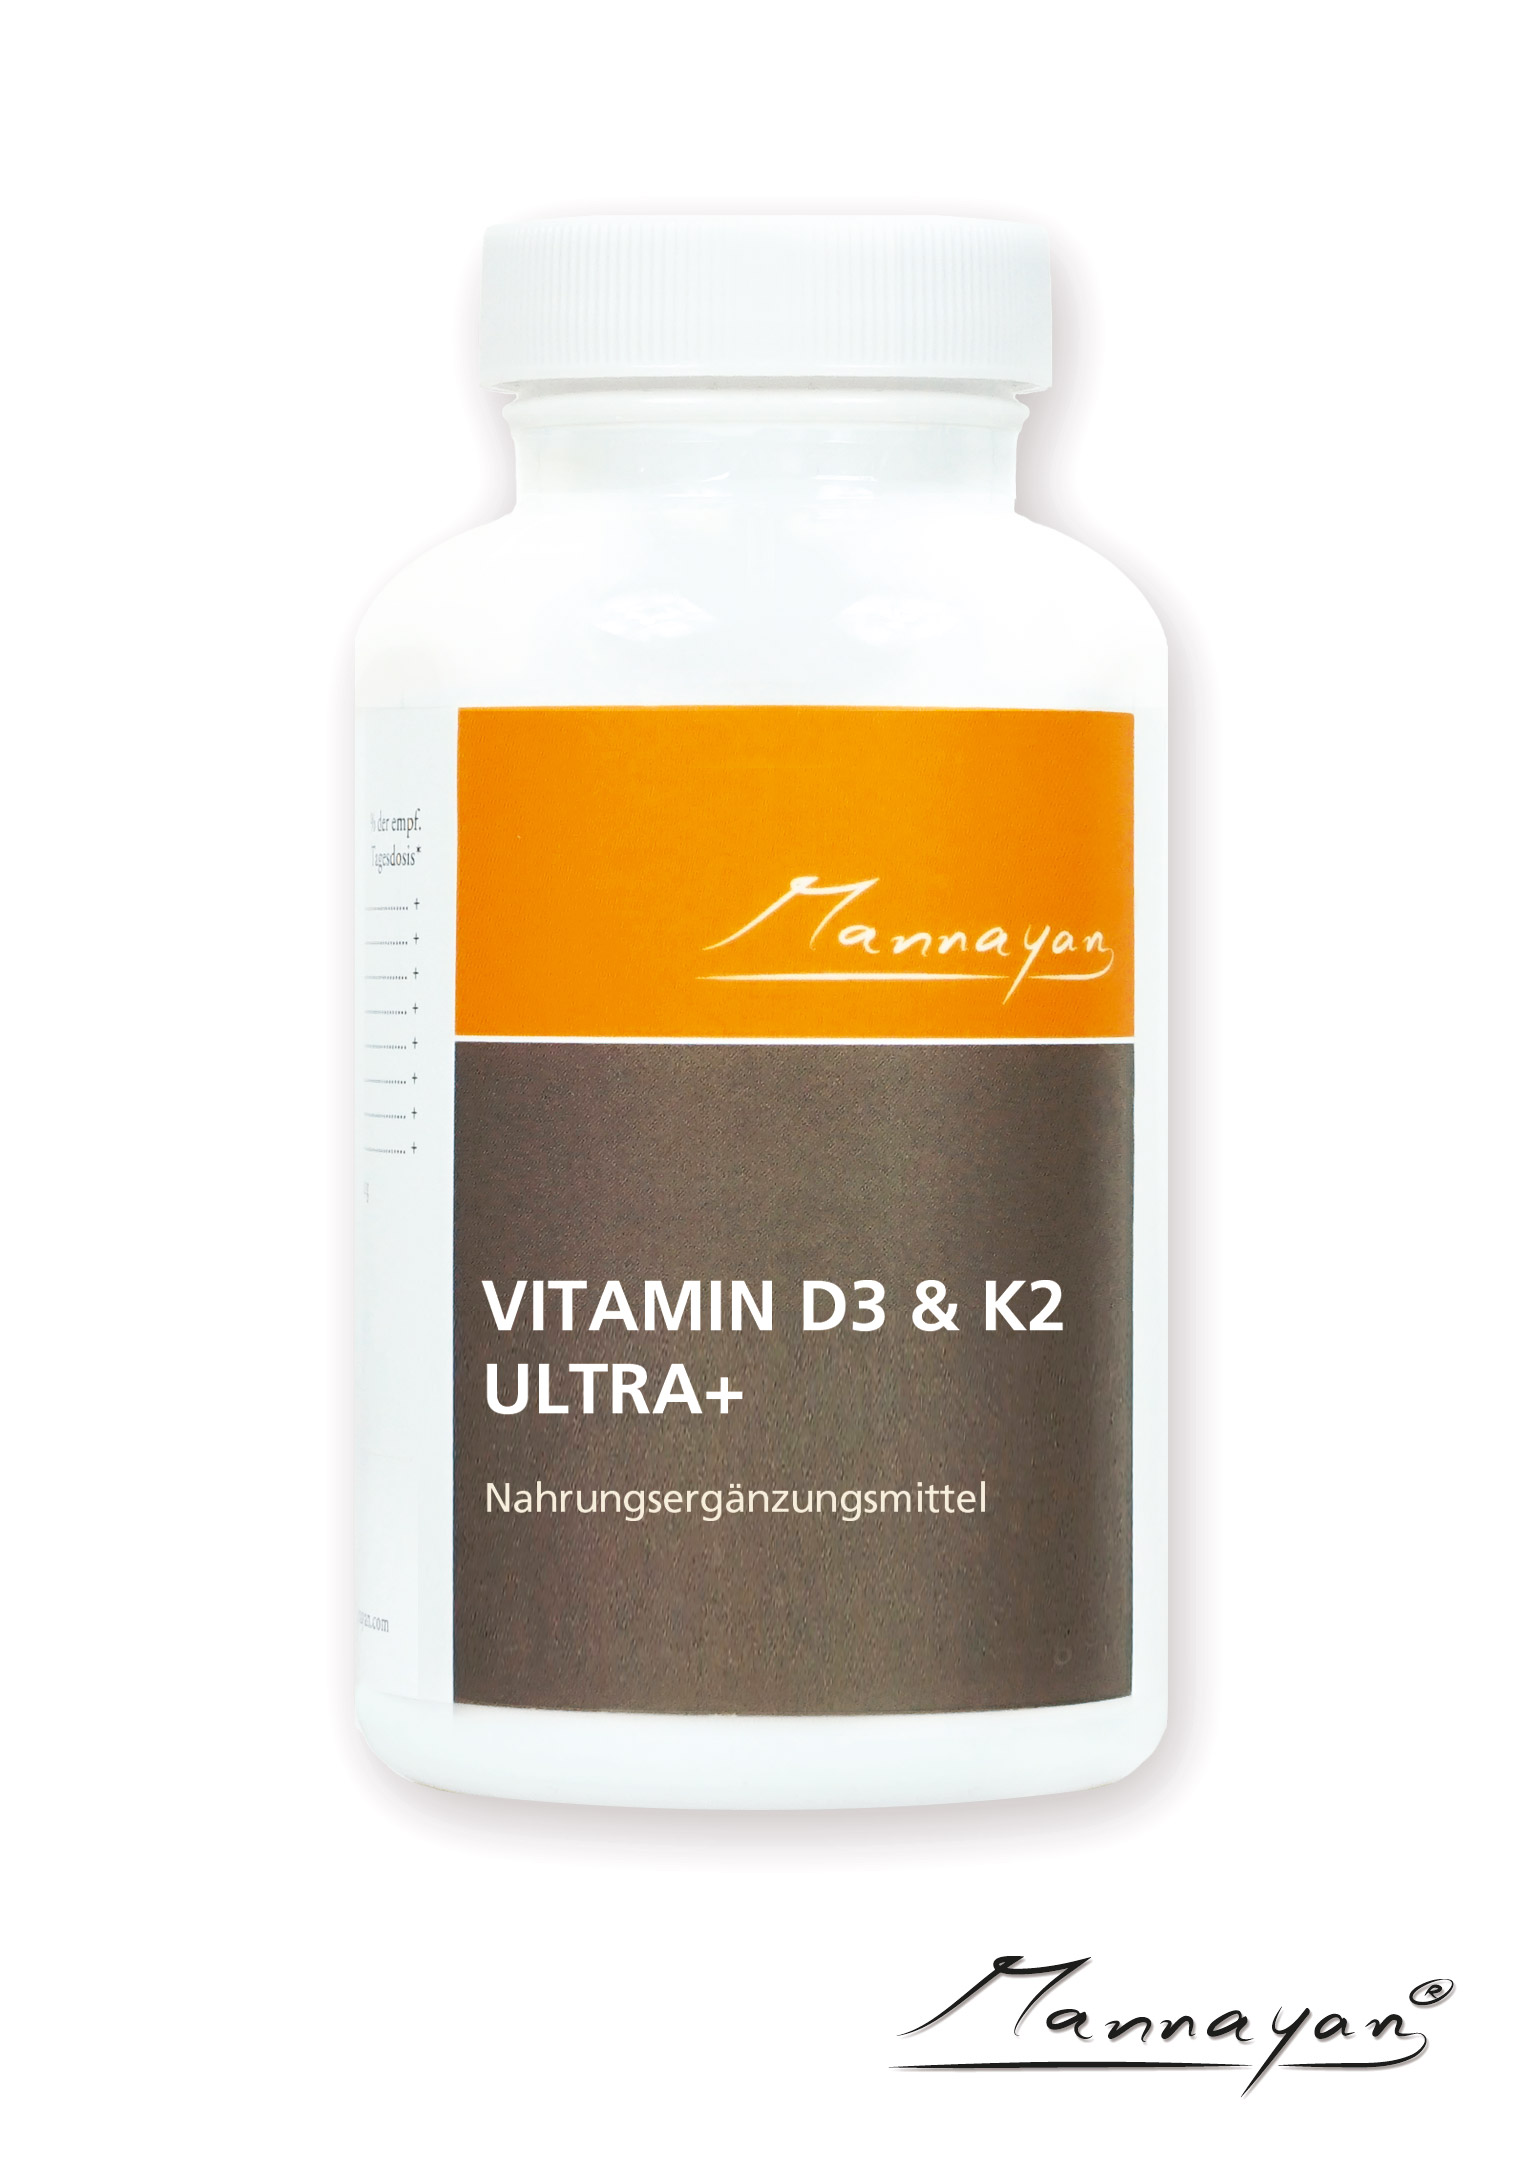 Mannayan VITAMIN D3 & K2 ULTRA + (60 capsules)